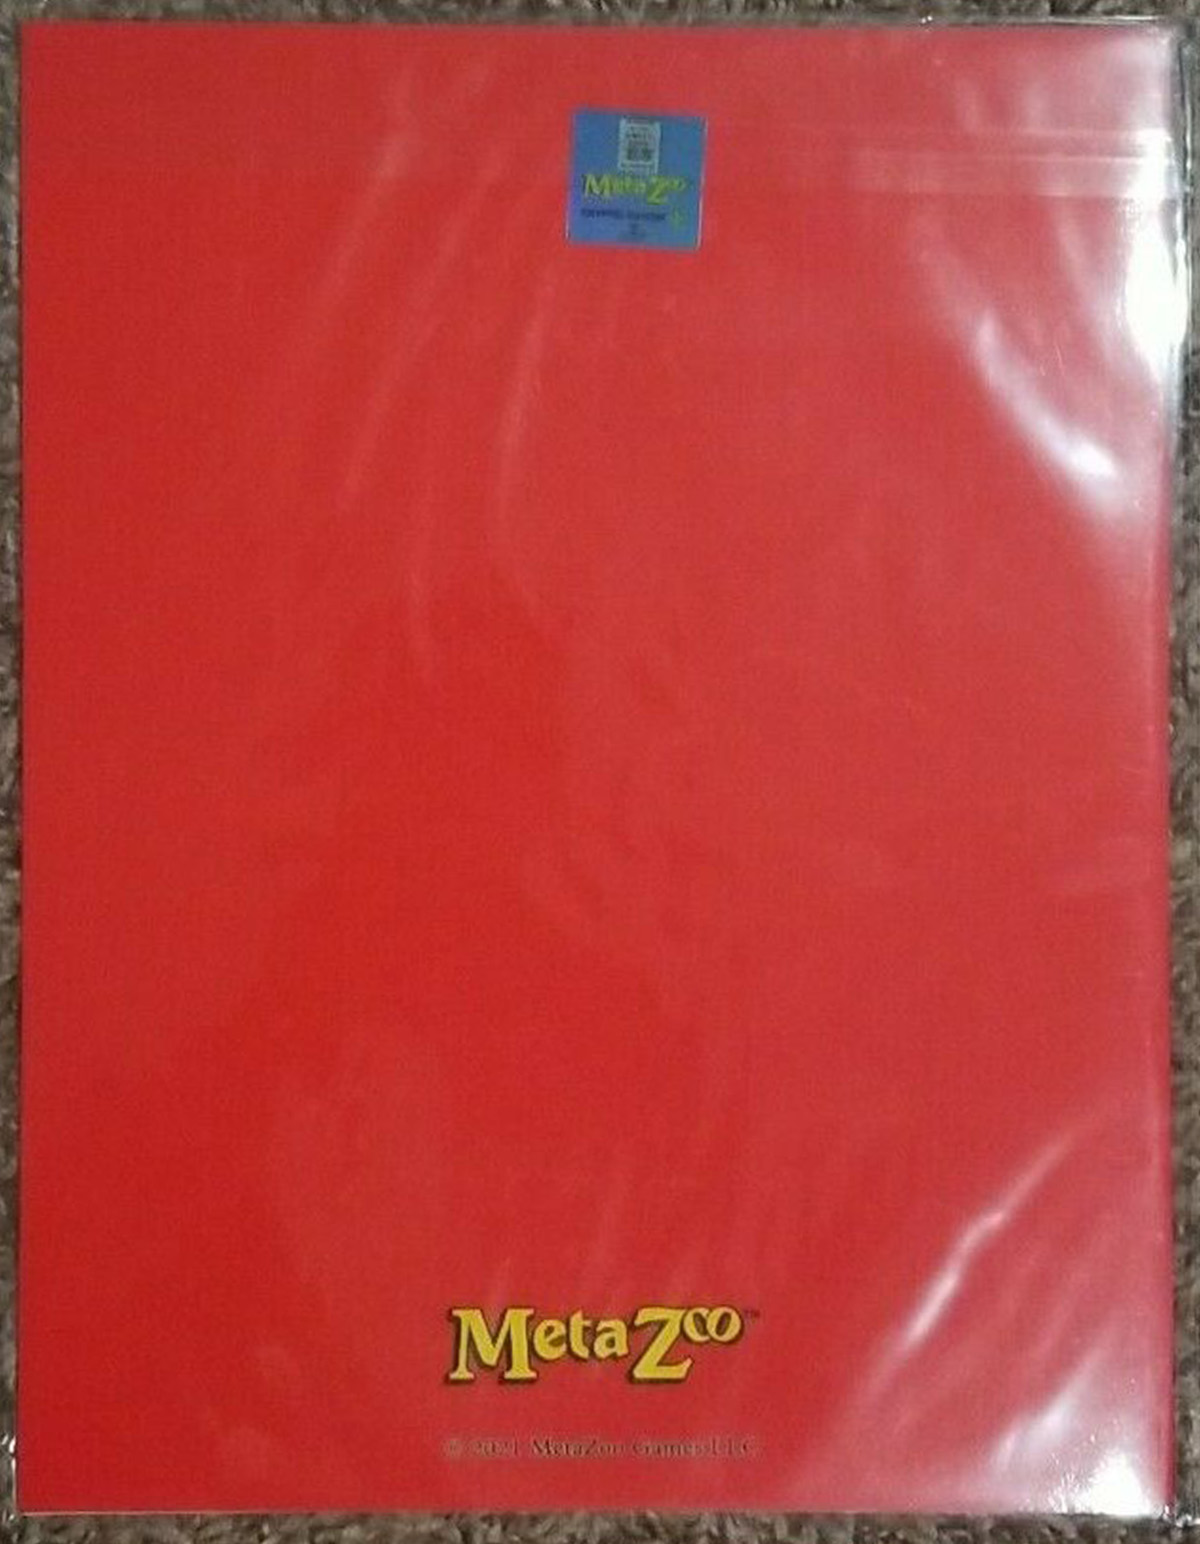 MetaZoo Illustrated Novel - Chapter 2 Print 2 - Back